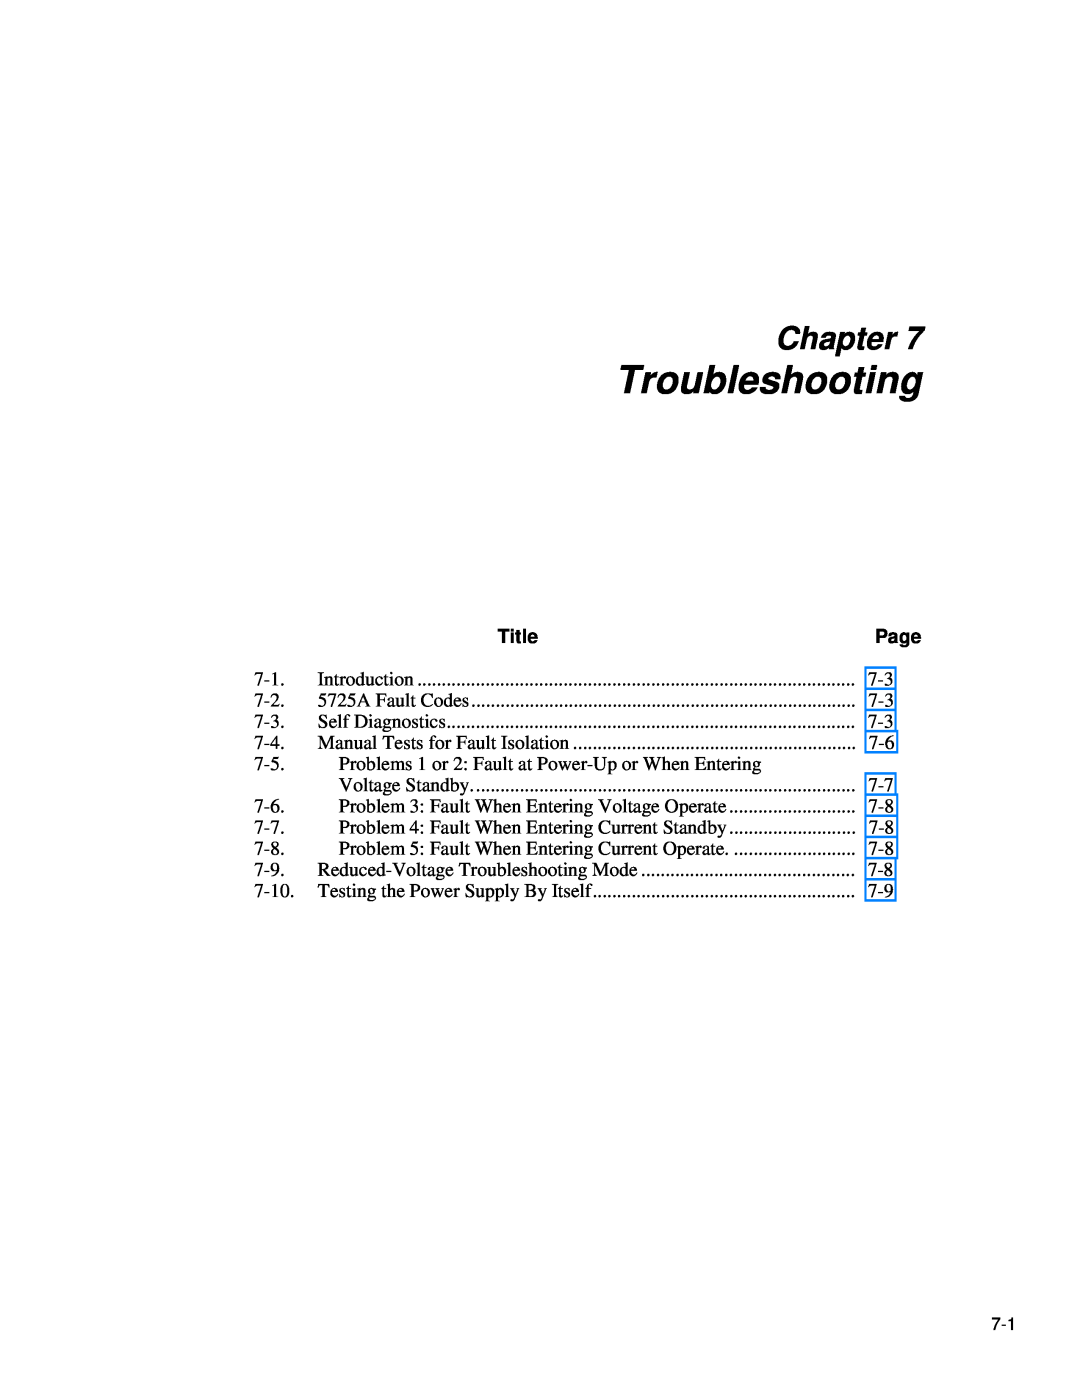 Fluke 5725A instruction manual Troubleshooting, Chapter 